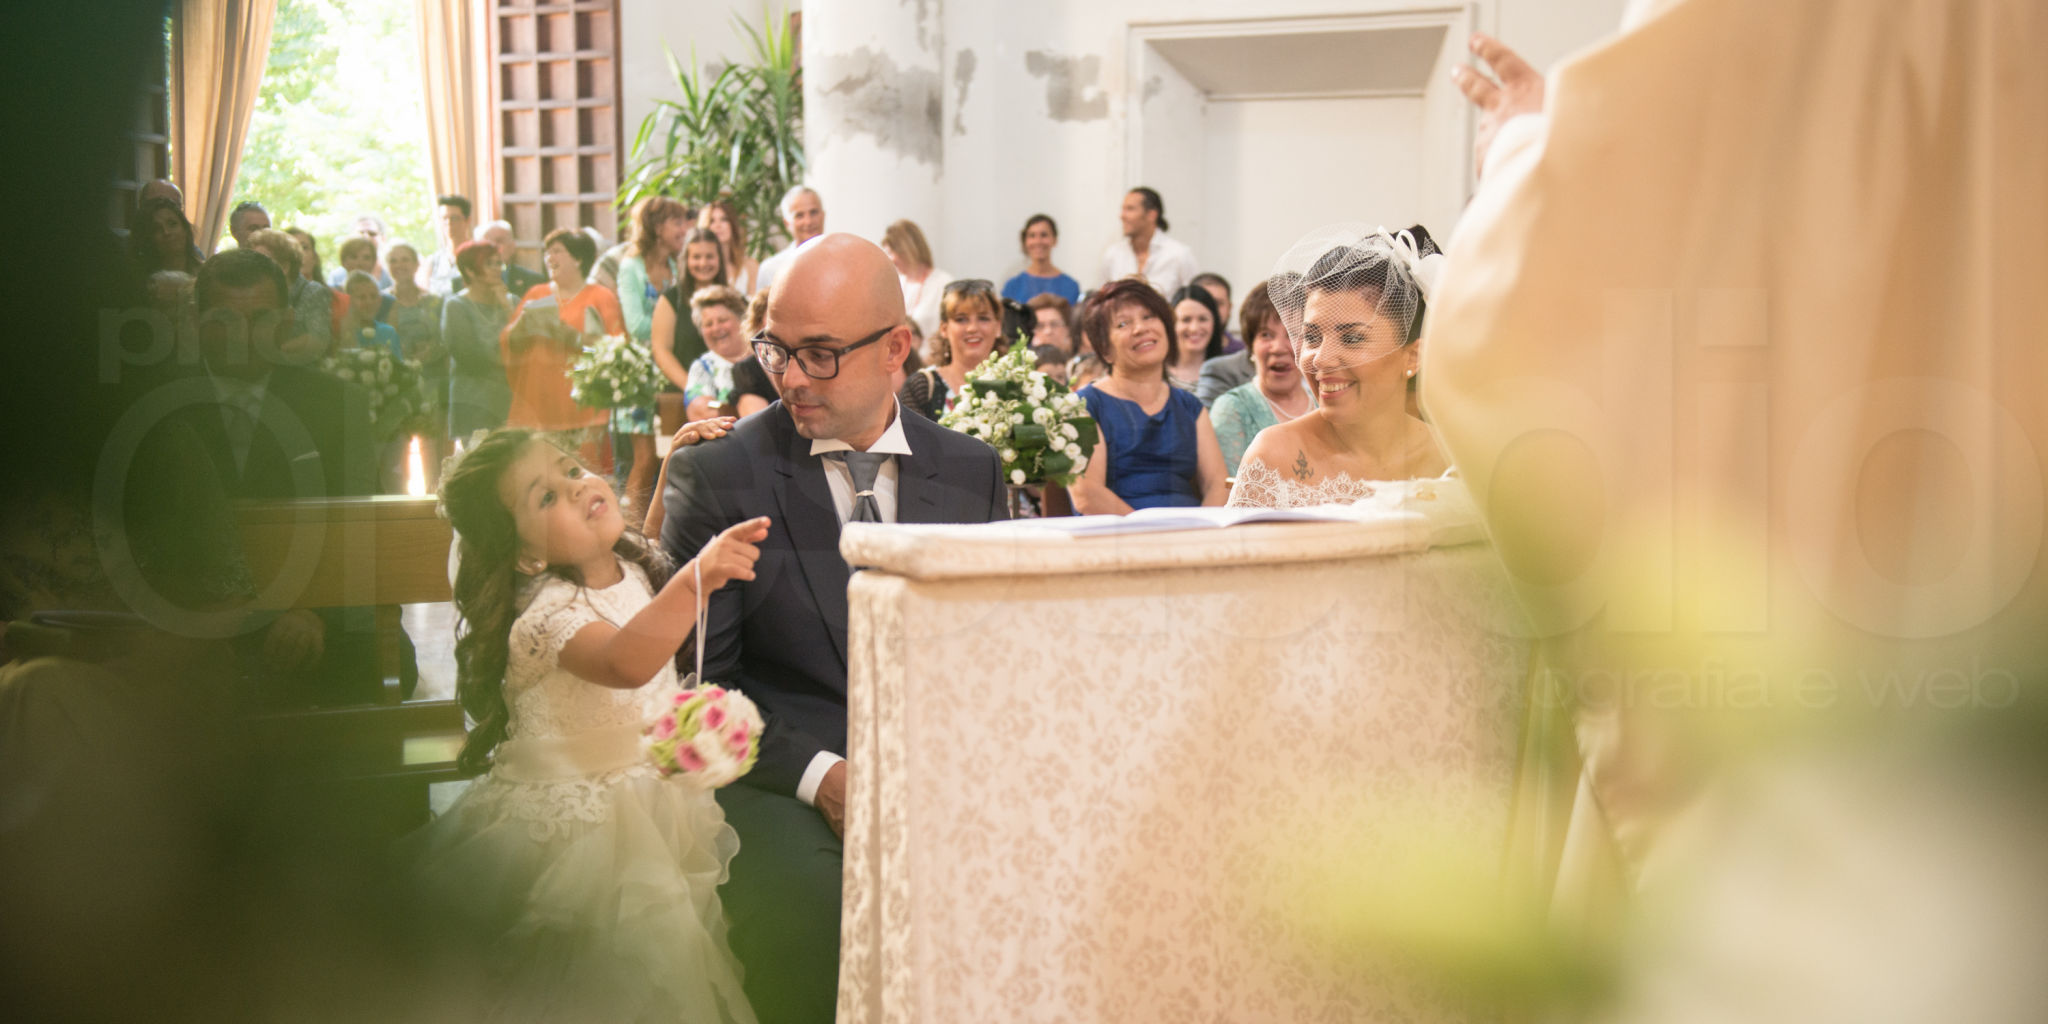 https://lnx.mirkone.it/wp-content/uploads/2015/07/fotografo-matrimoni-faenza-cerimonia-0019.jpg